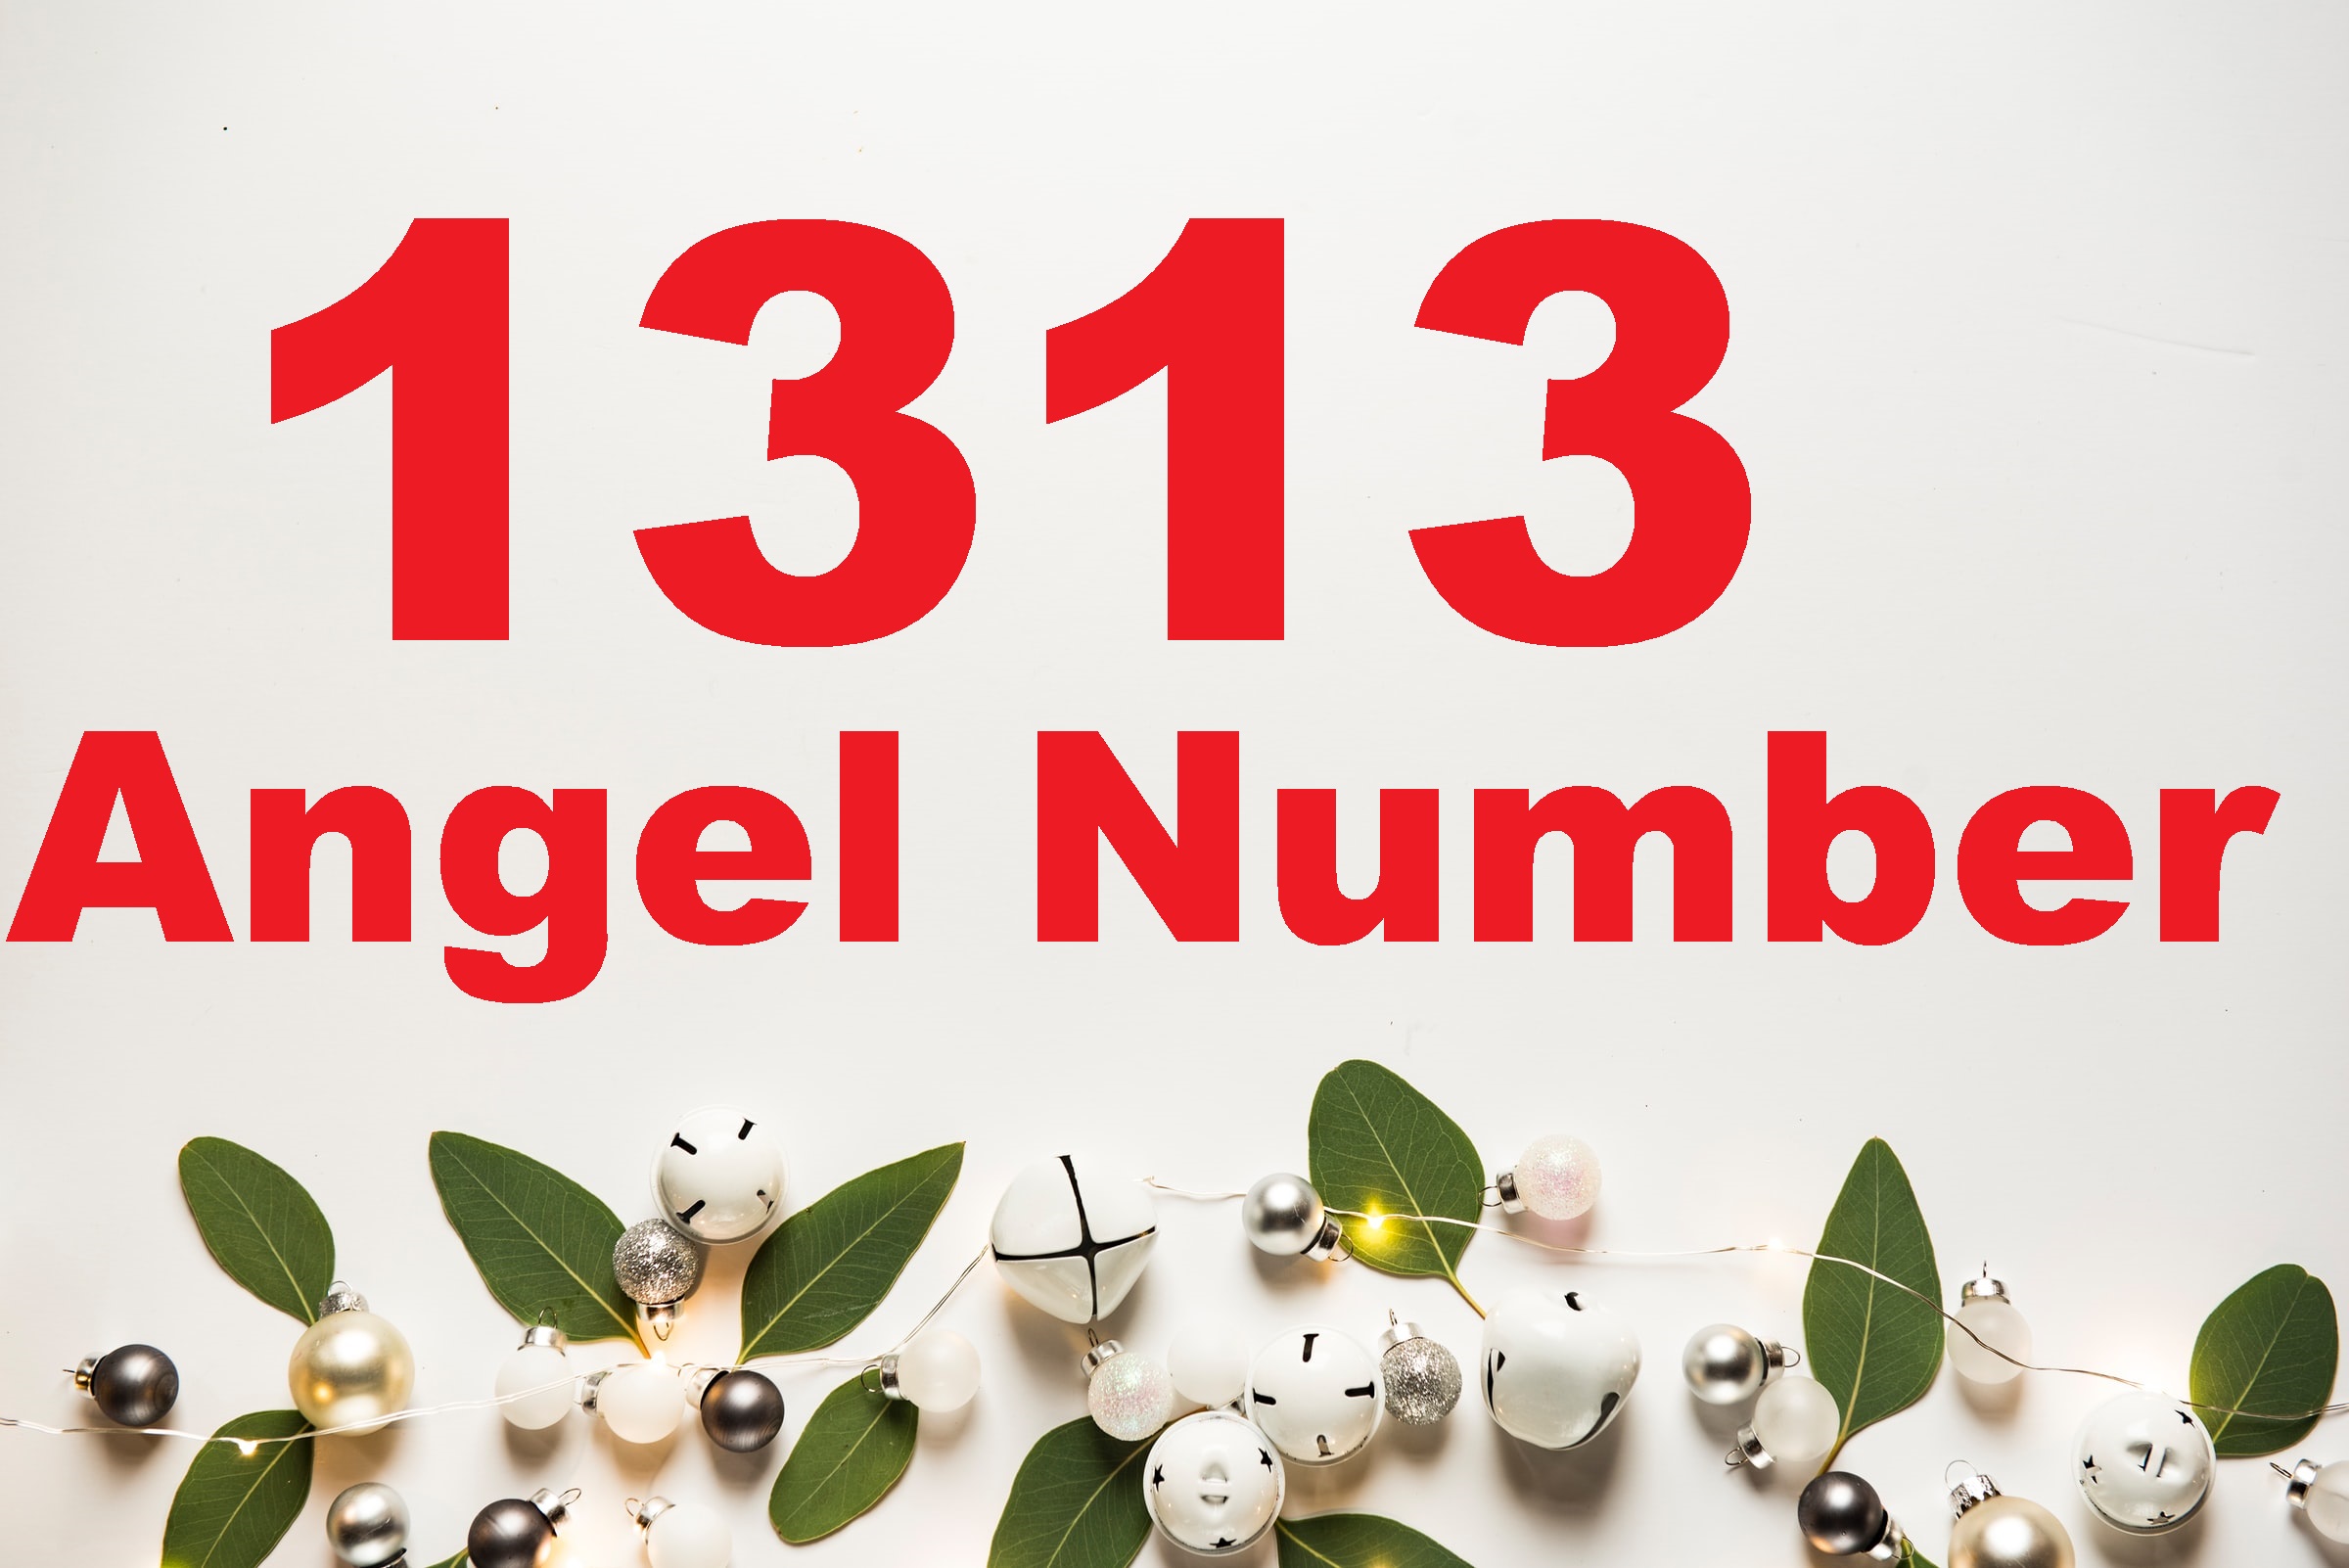 1313 Angel Number Represents New Beginnings